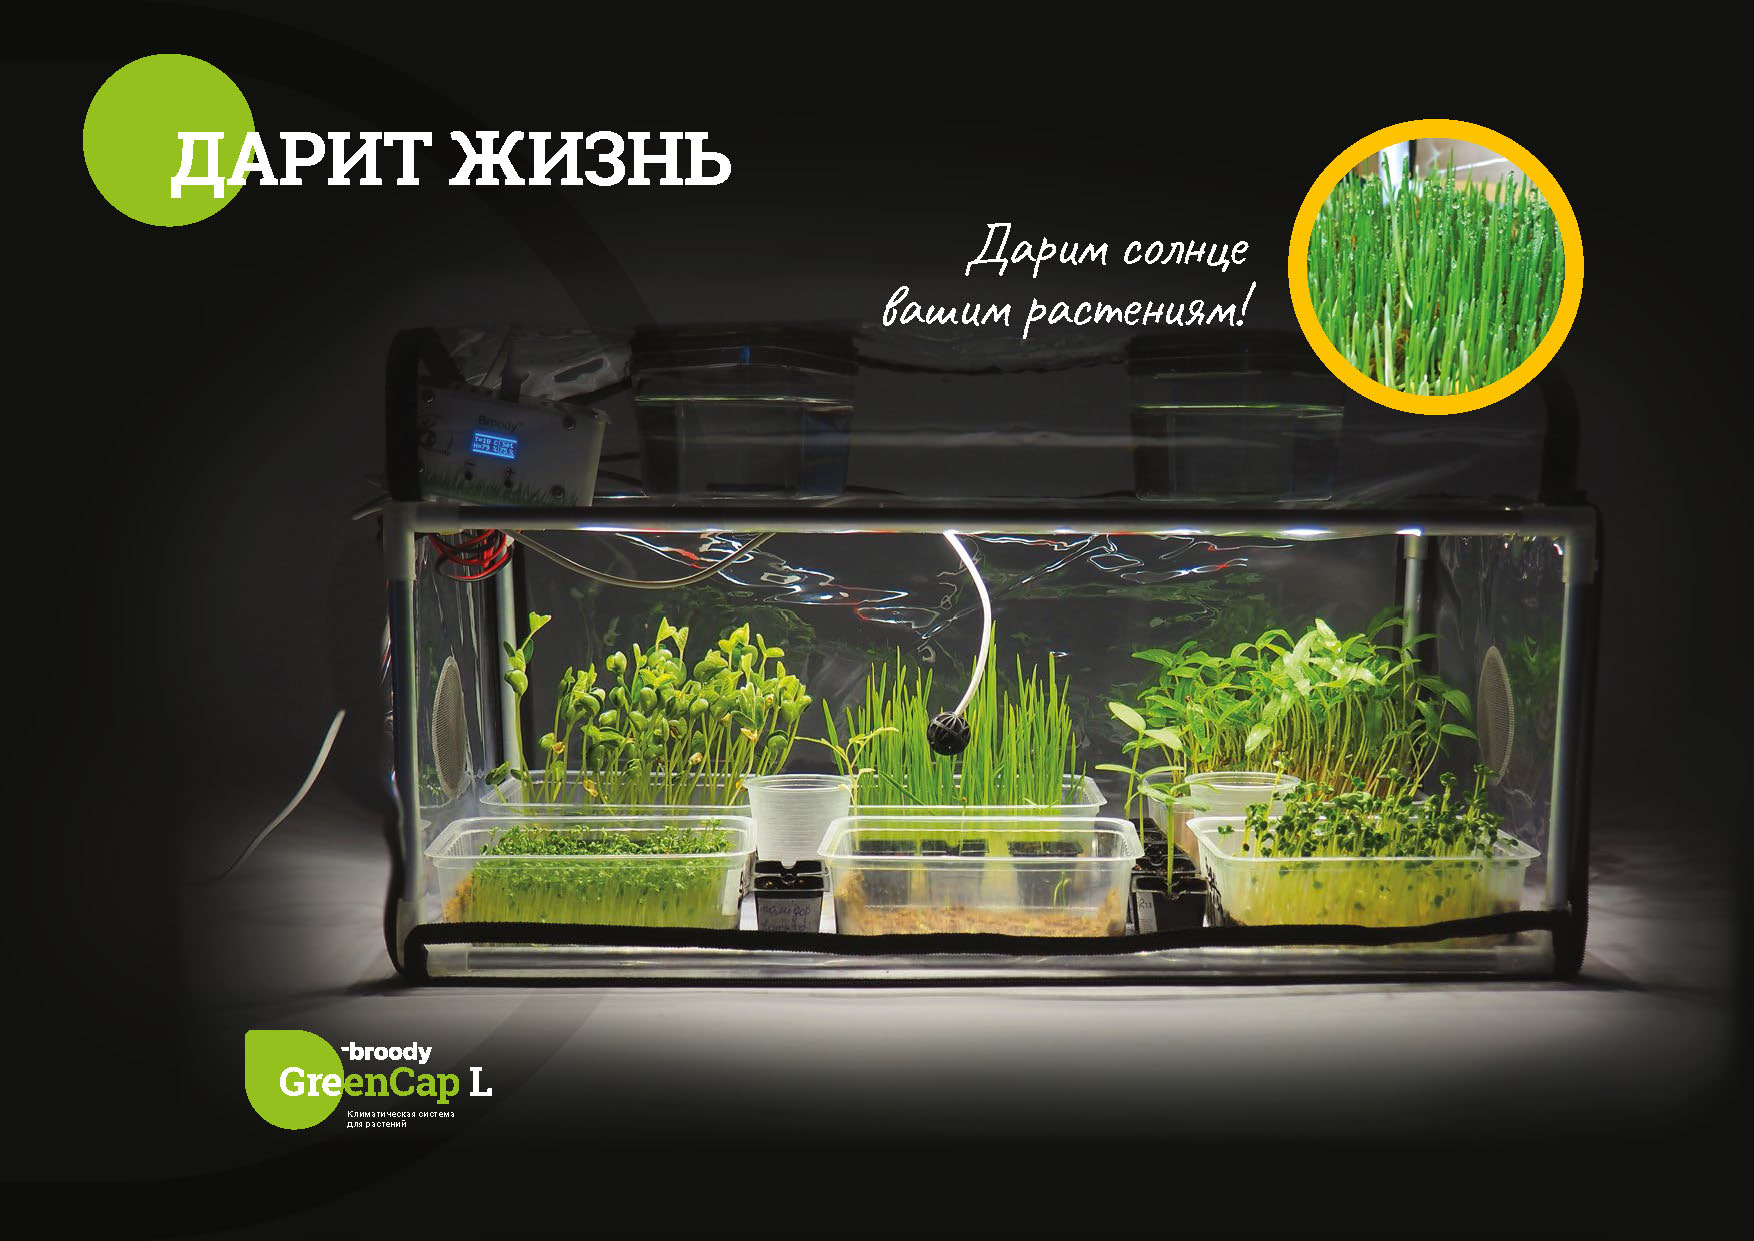 Plant propagator with light